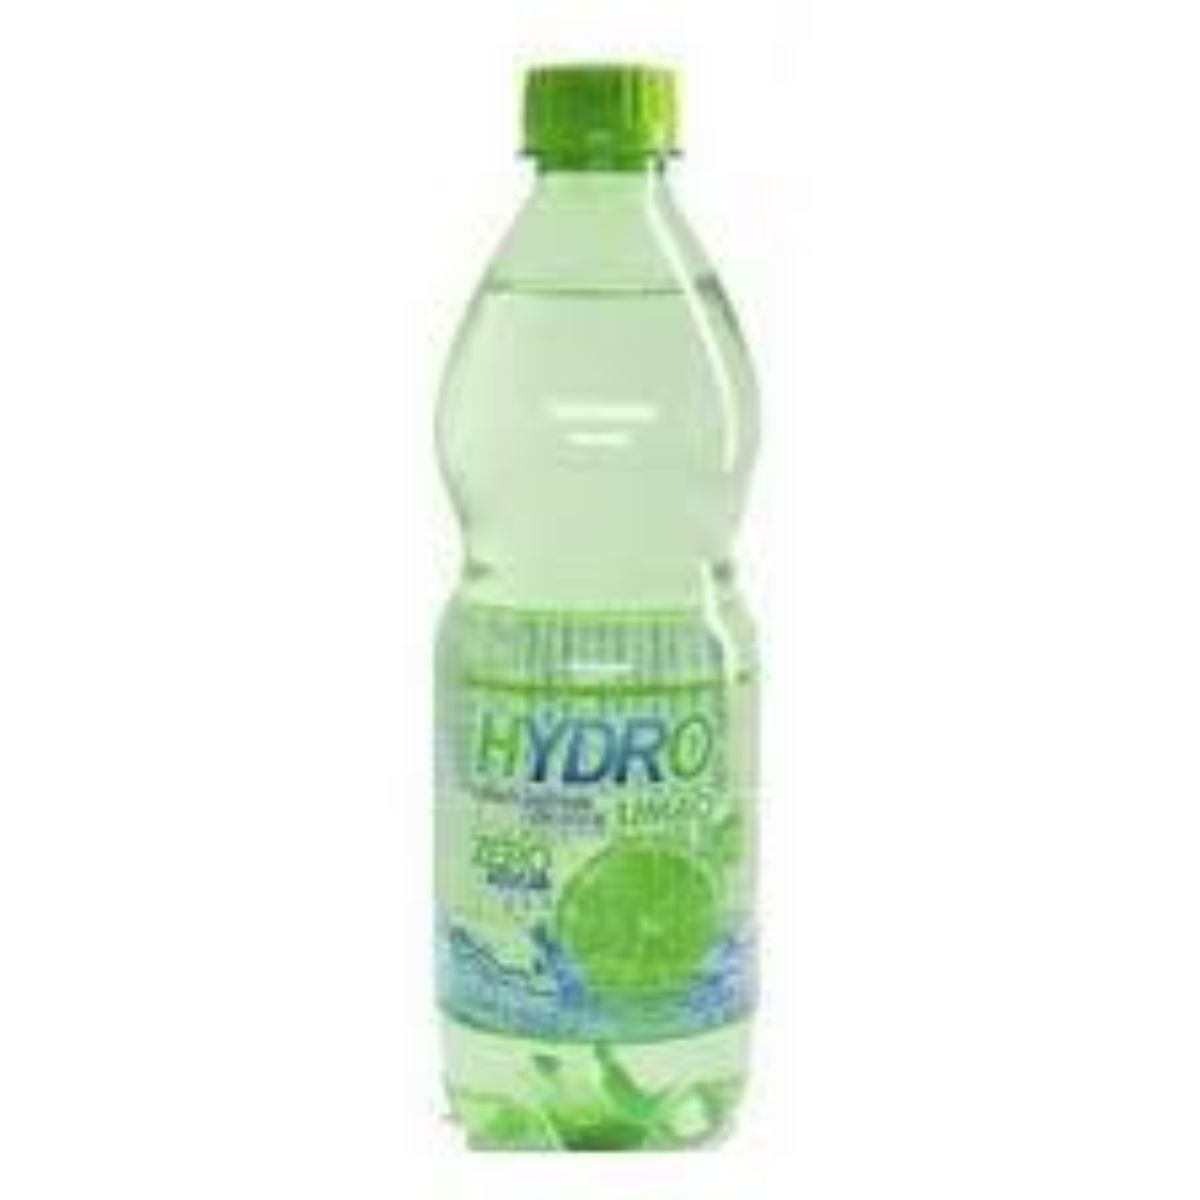 agua-sabor-hydro-limao-pet-500ml-1.jpg